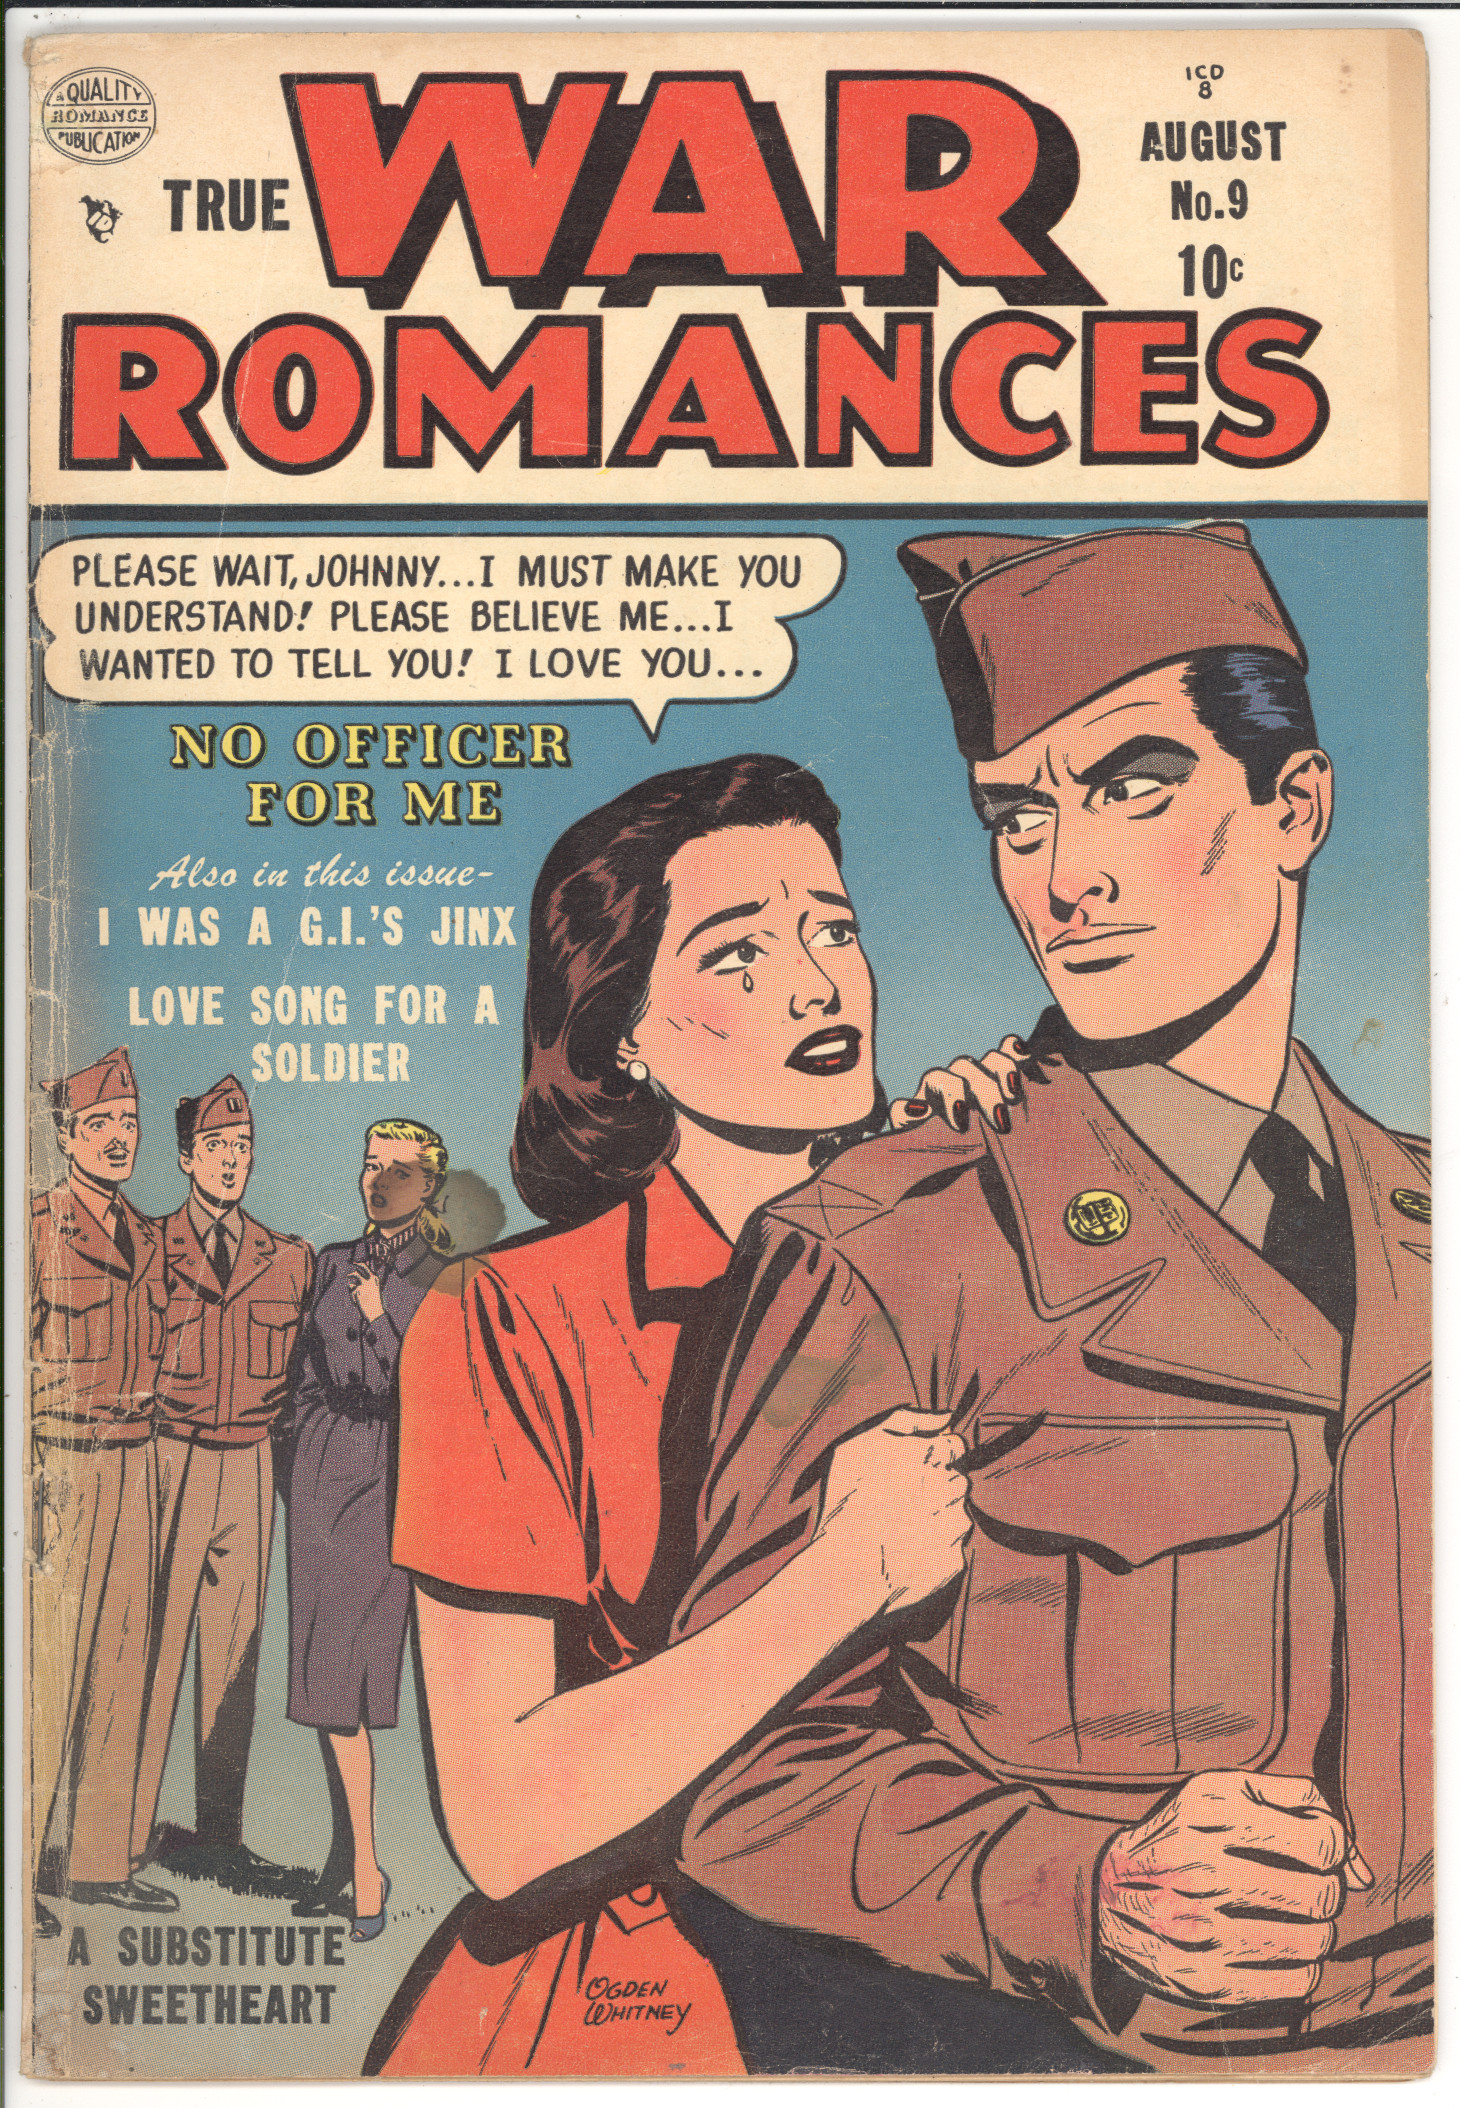 True War Romances #9 front